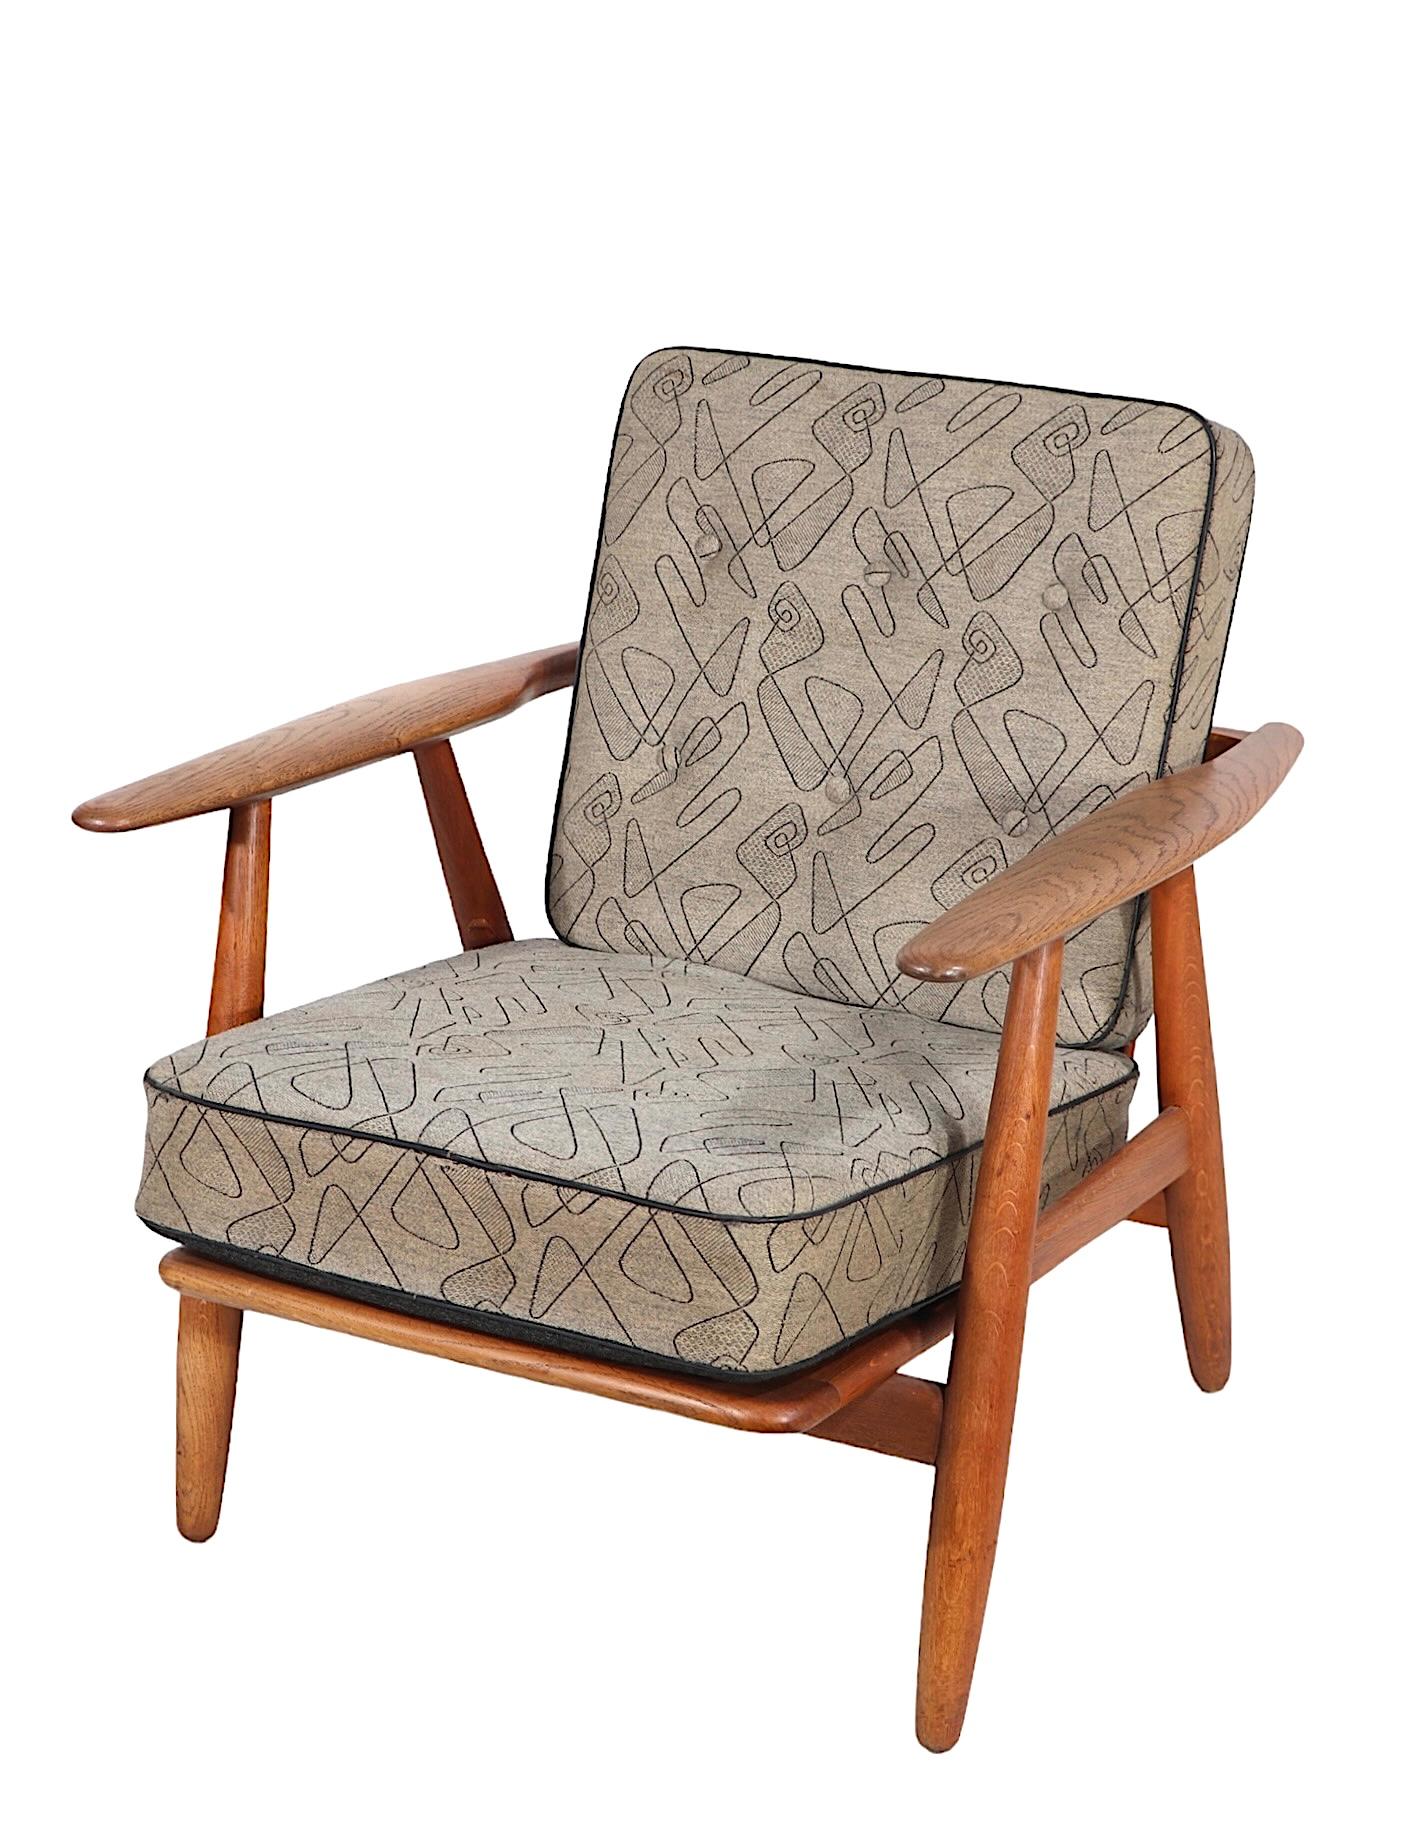 Scandinavian Modern Original Hans Wegner Cigar Chair Made in Denmark for GETAMA c 1950's For Sale